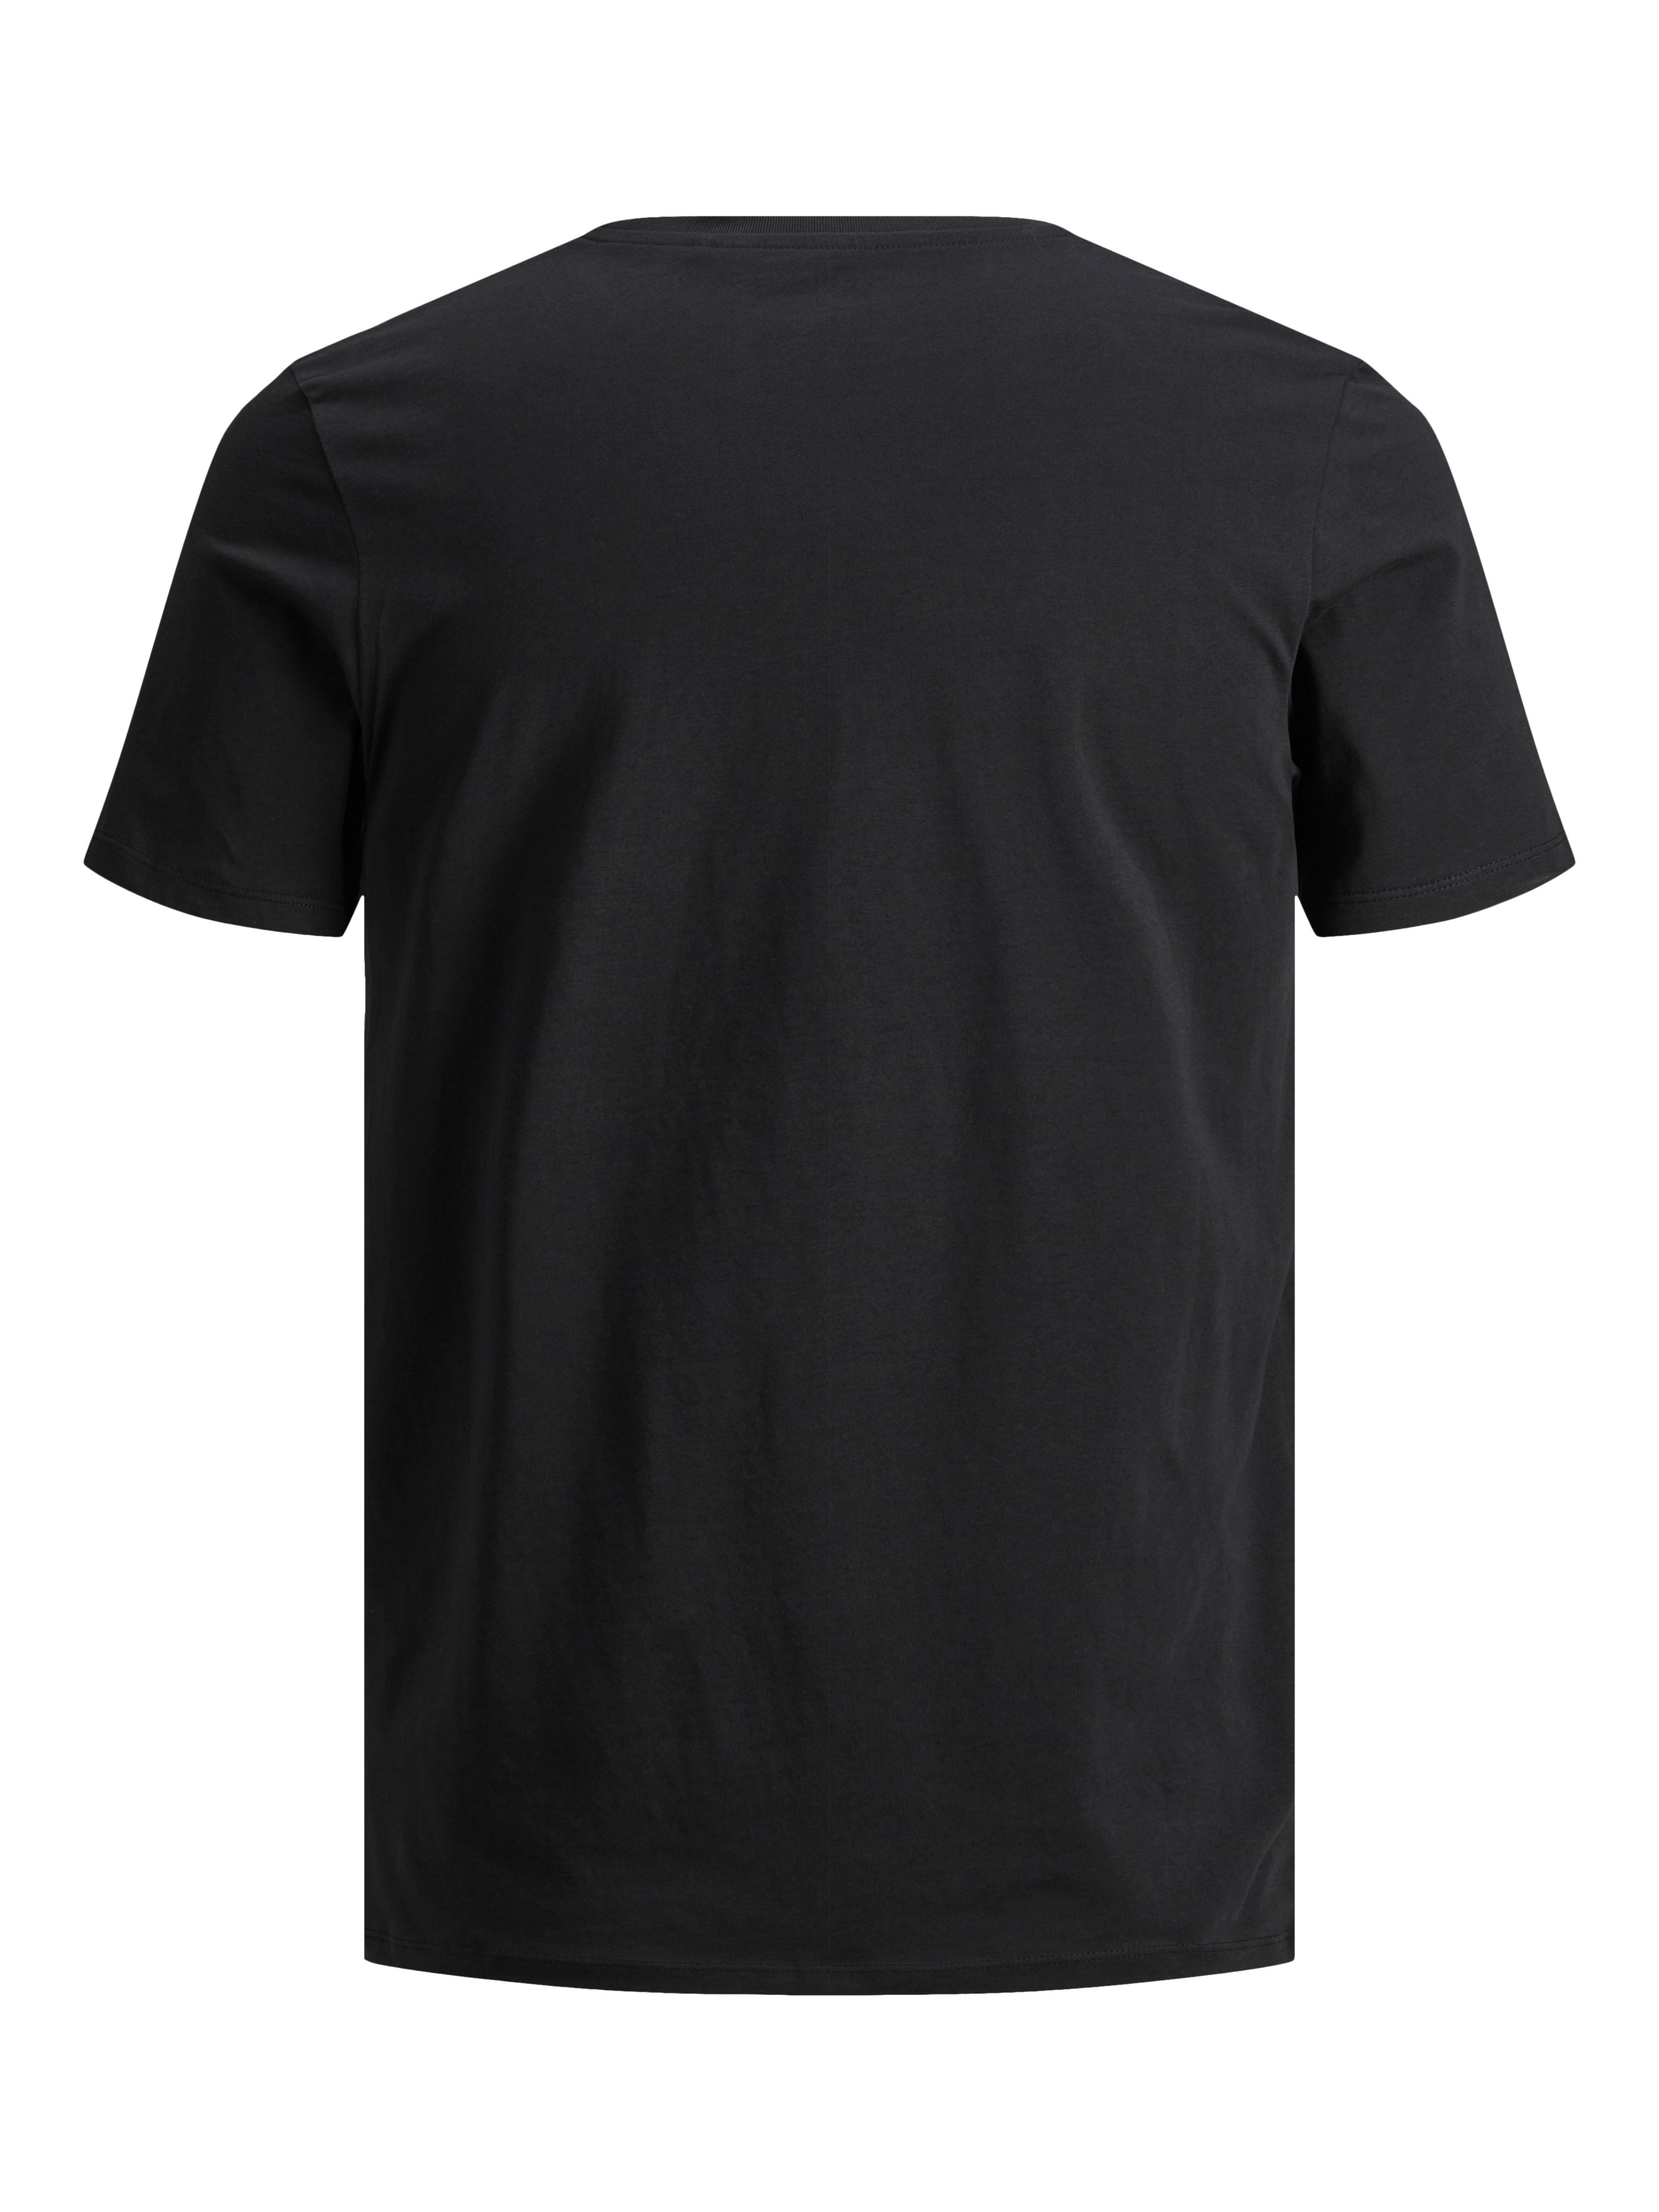 Jack & Jones - T-shirt in cotone, Nero, large image number 1